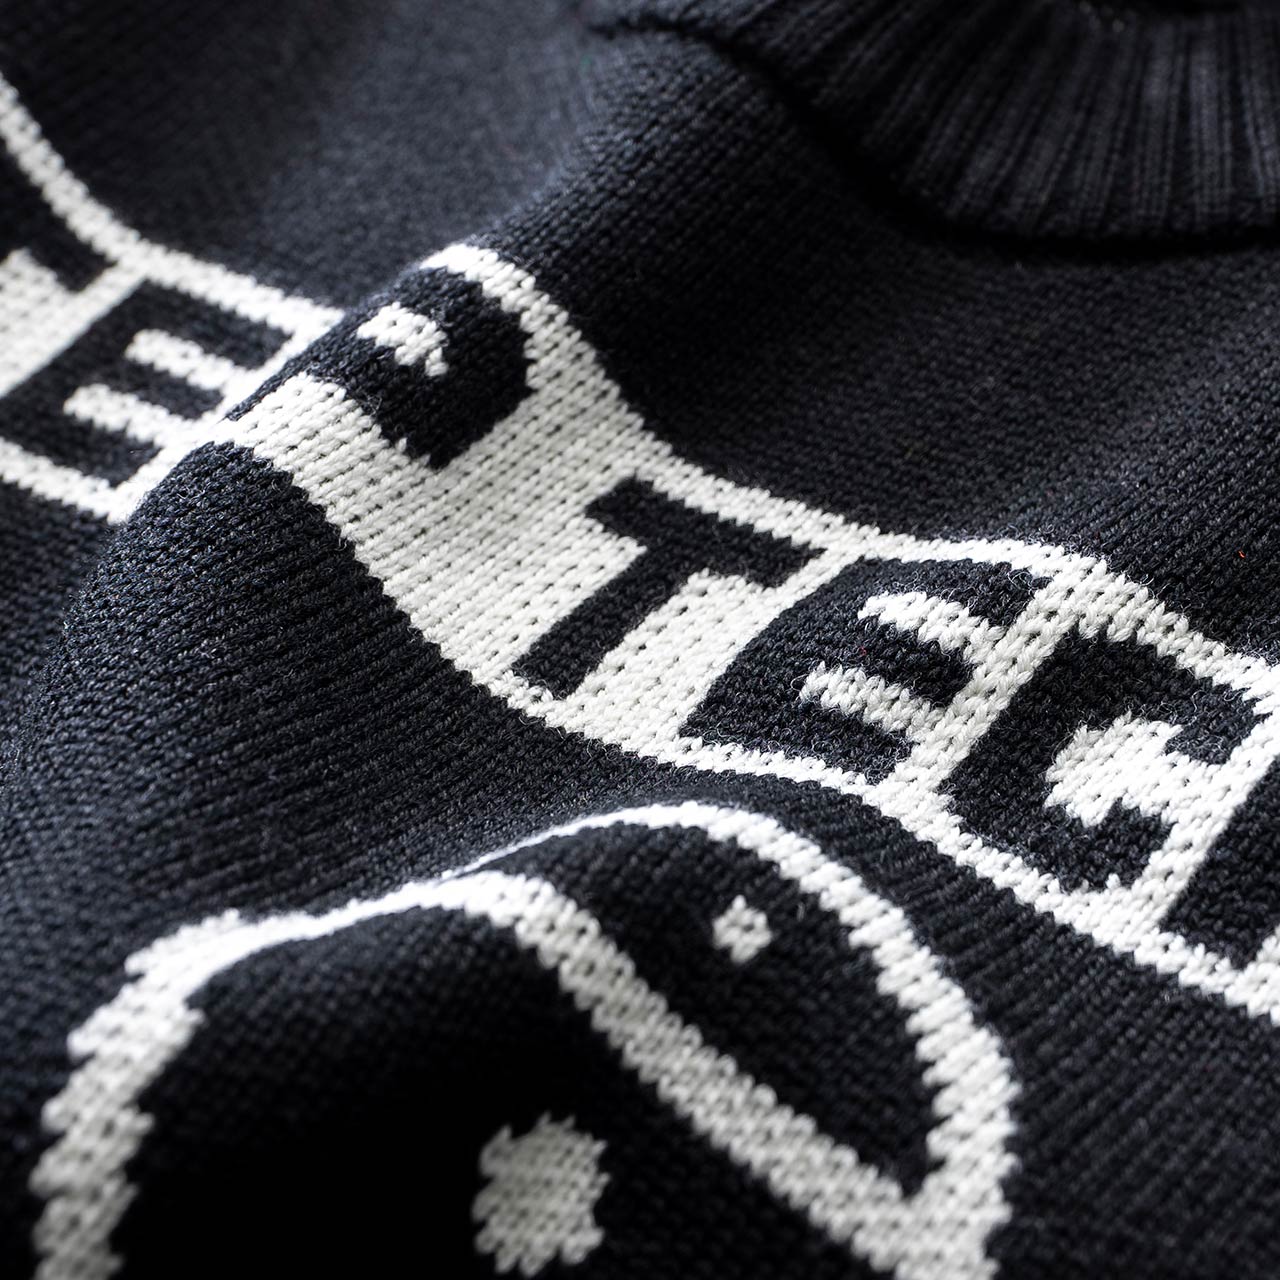 the north face black series steep tech knit top (black) - nf0a4qy3jk31 - a.plus - Image - 3